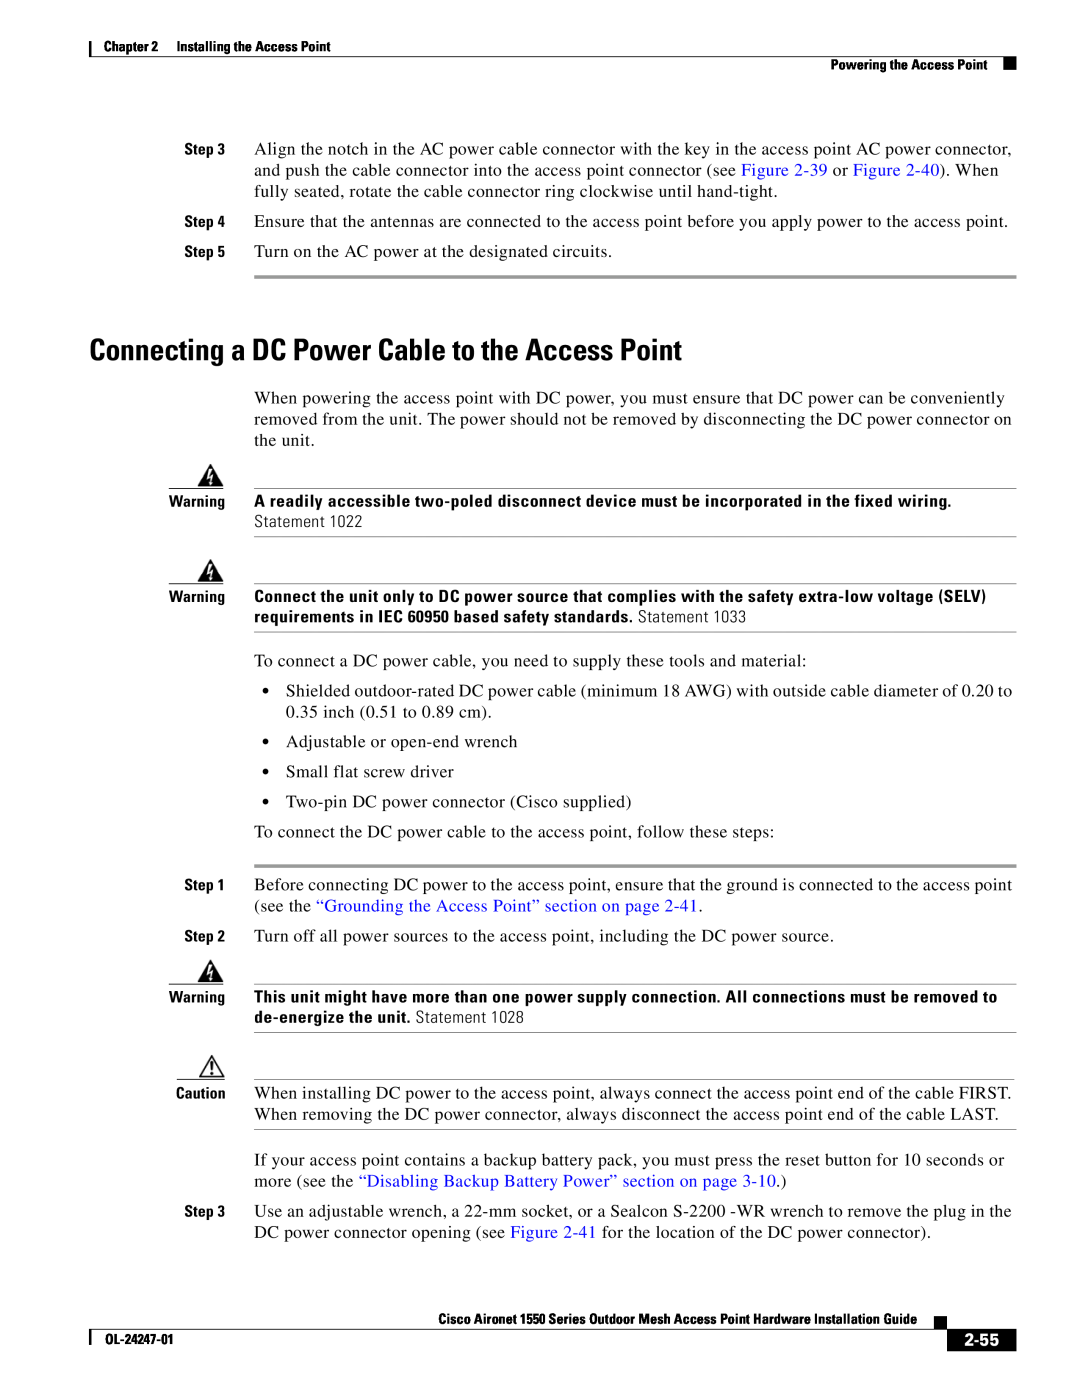 Cisco Systems AIRPWRINJ15002, AIRCAP1552EAK9RF, AIRCAP1552EUAK9 manual Connecting a DC Power Cable to the Access Point, 2-55 